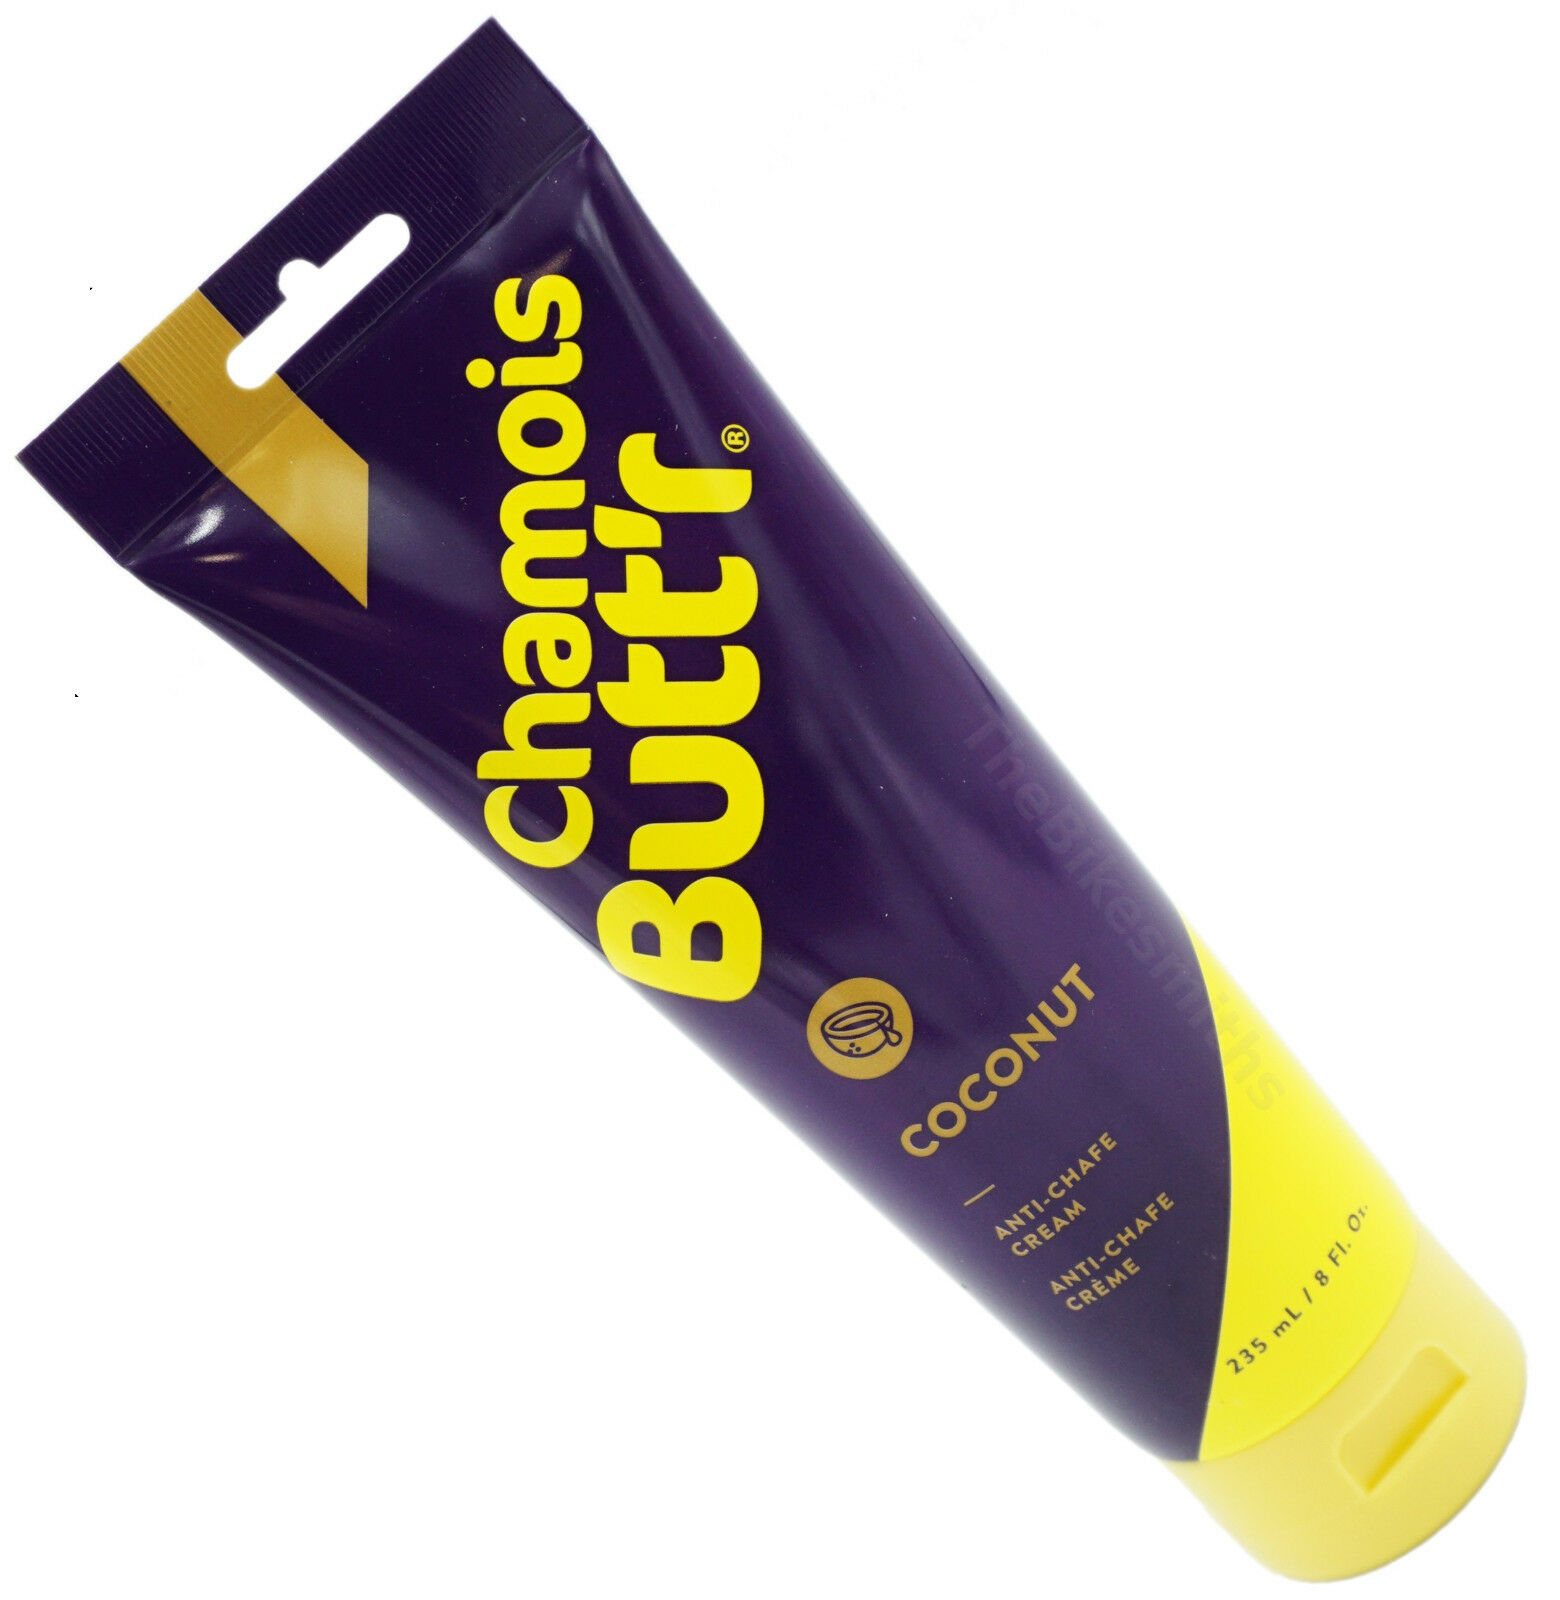 Chamois Butt'r Coconut Skin Anti-chafe Cream 8oz.tube Bike Shorts Butter Buttr